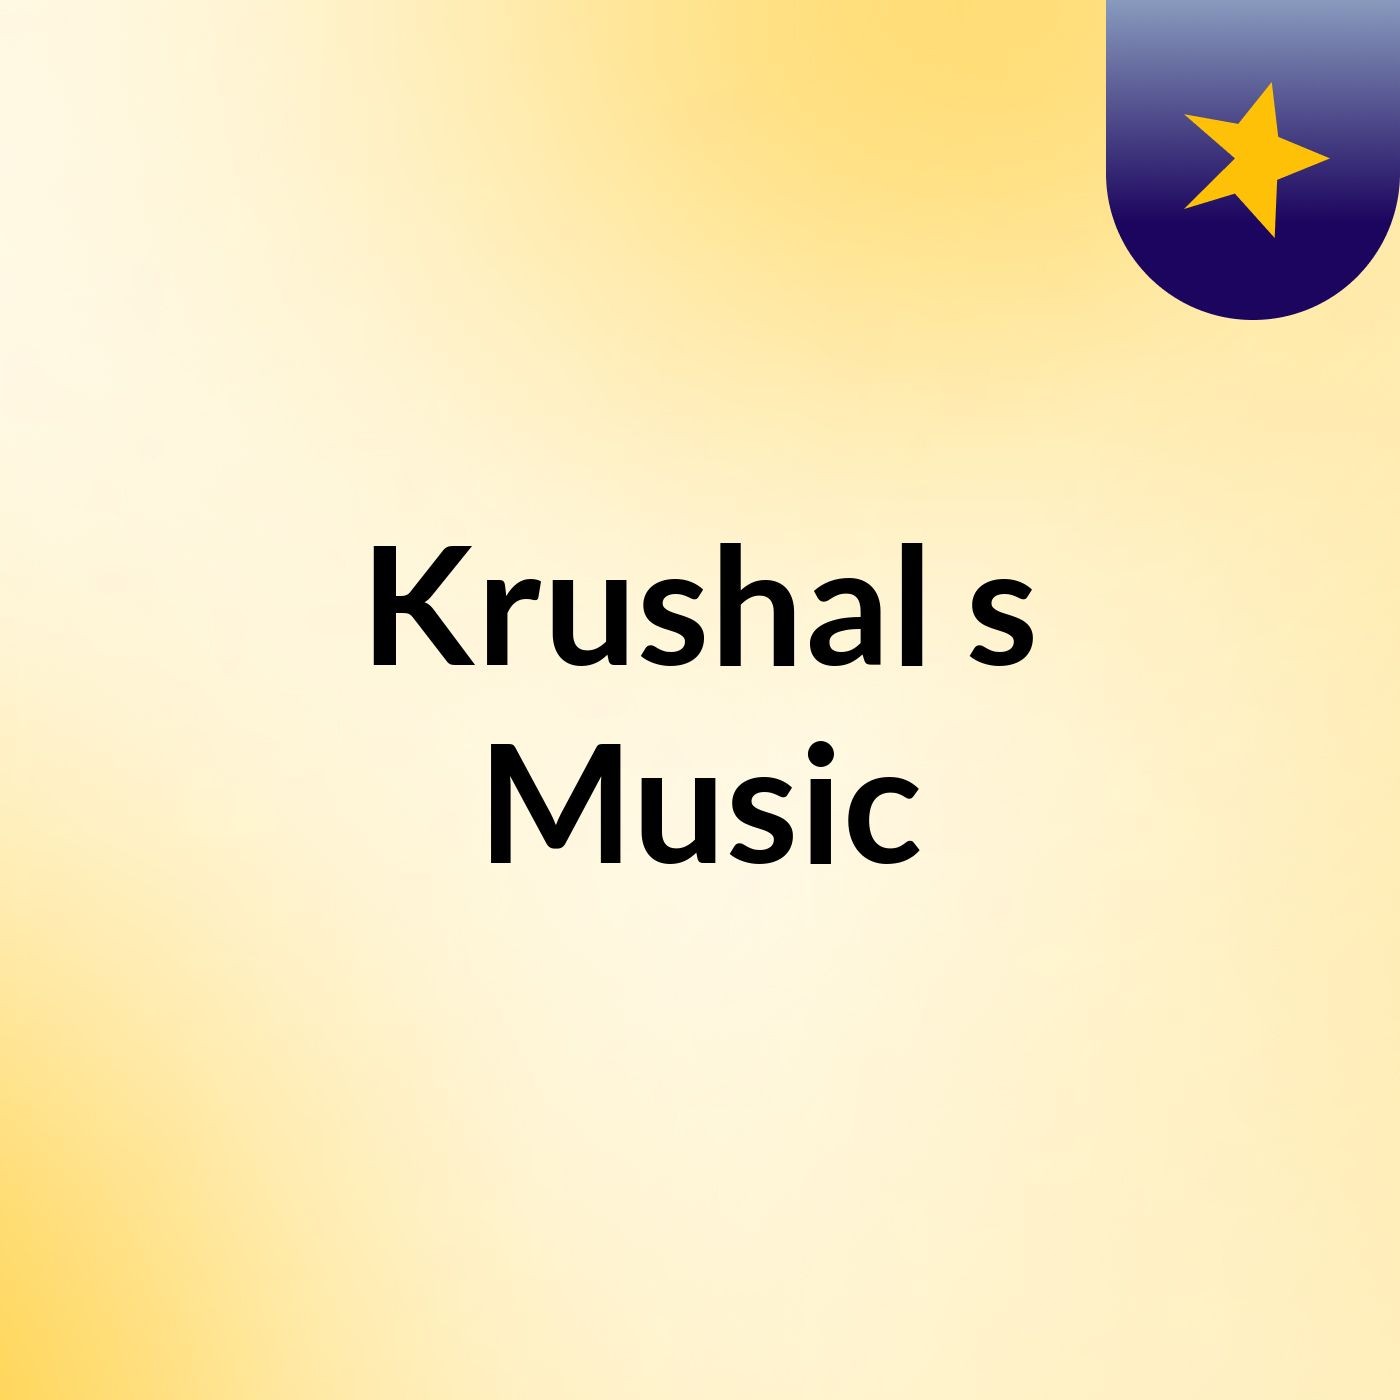 Krushal's Music